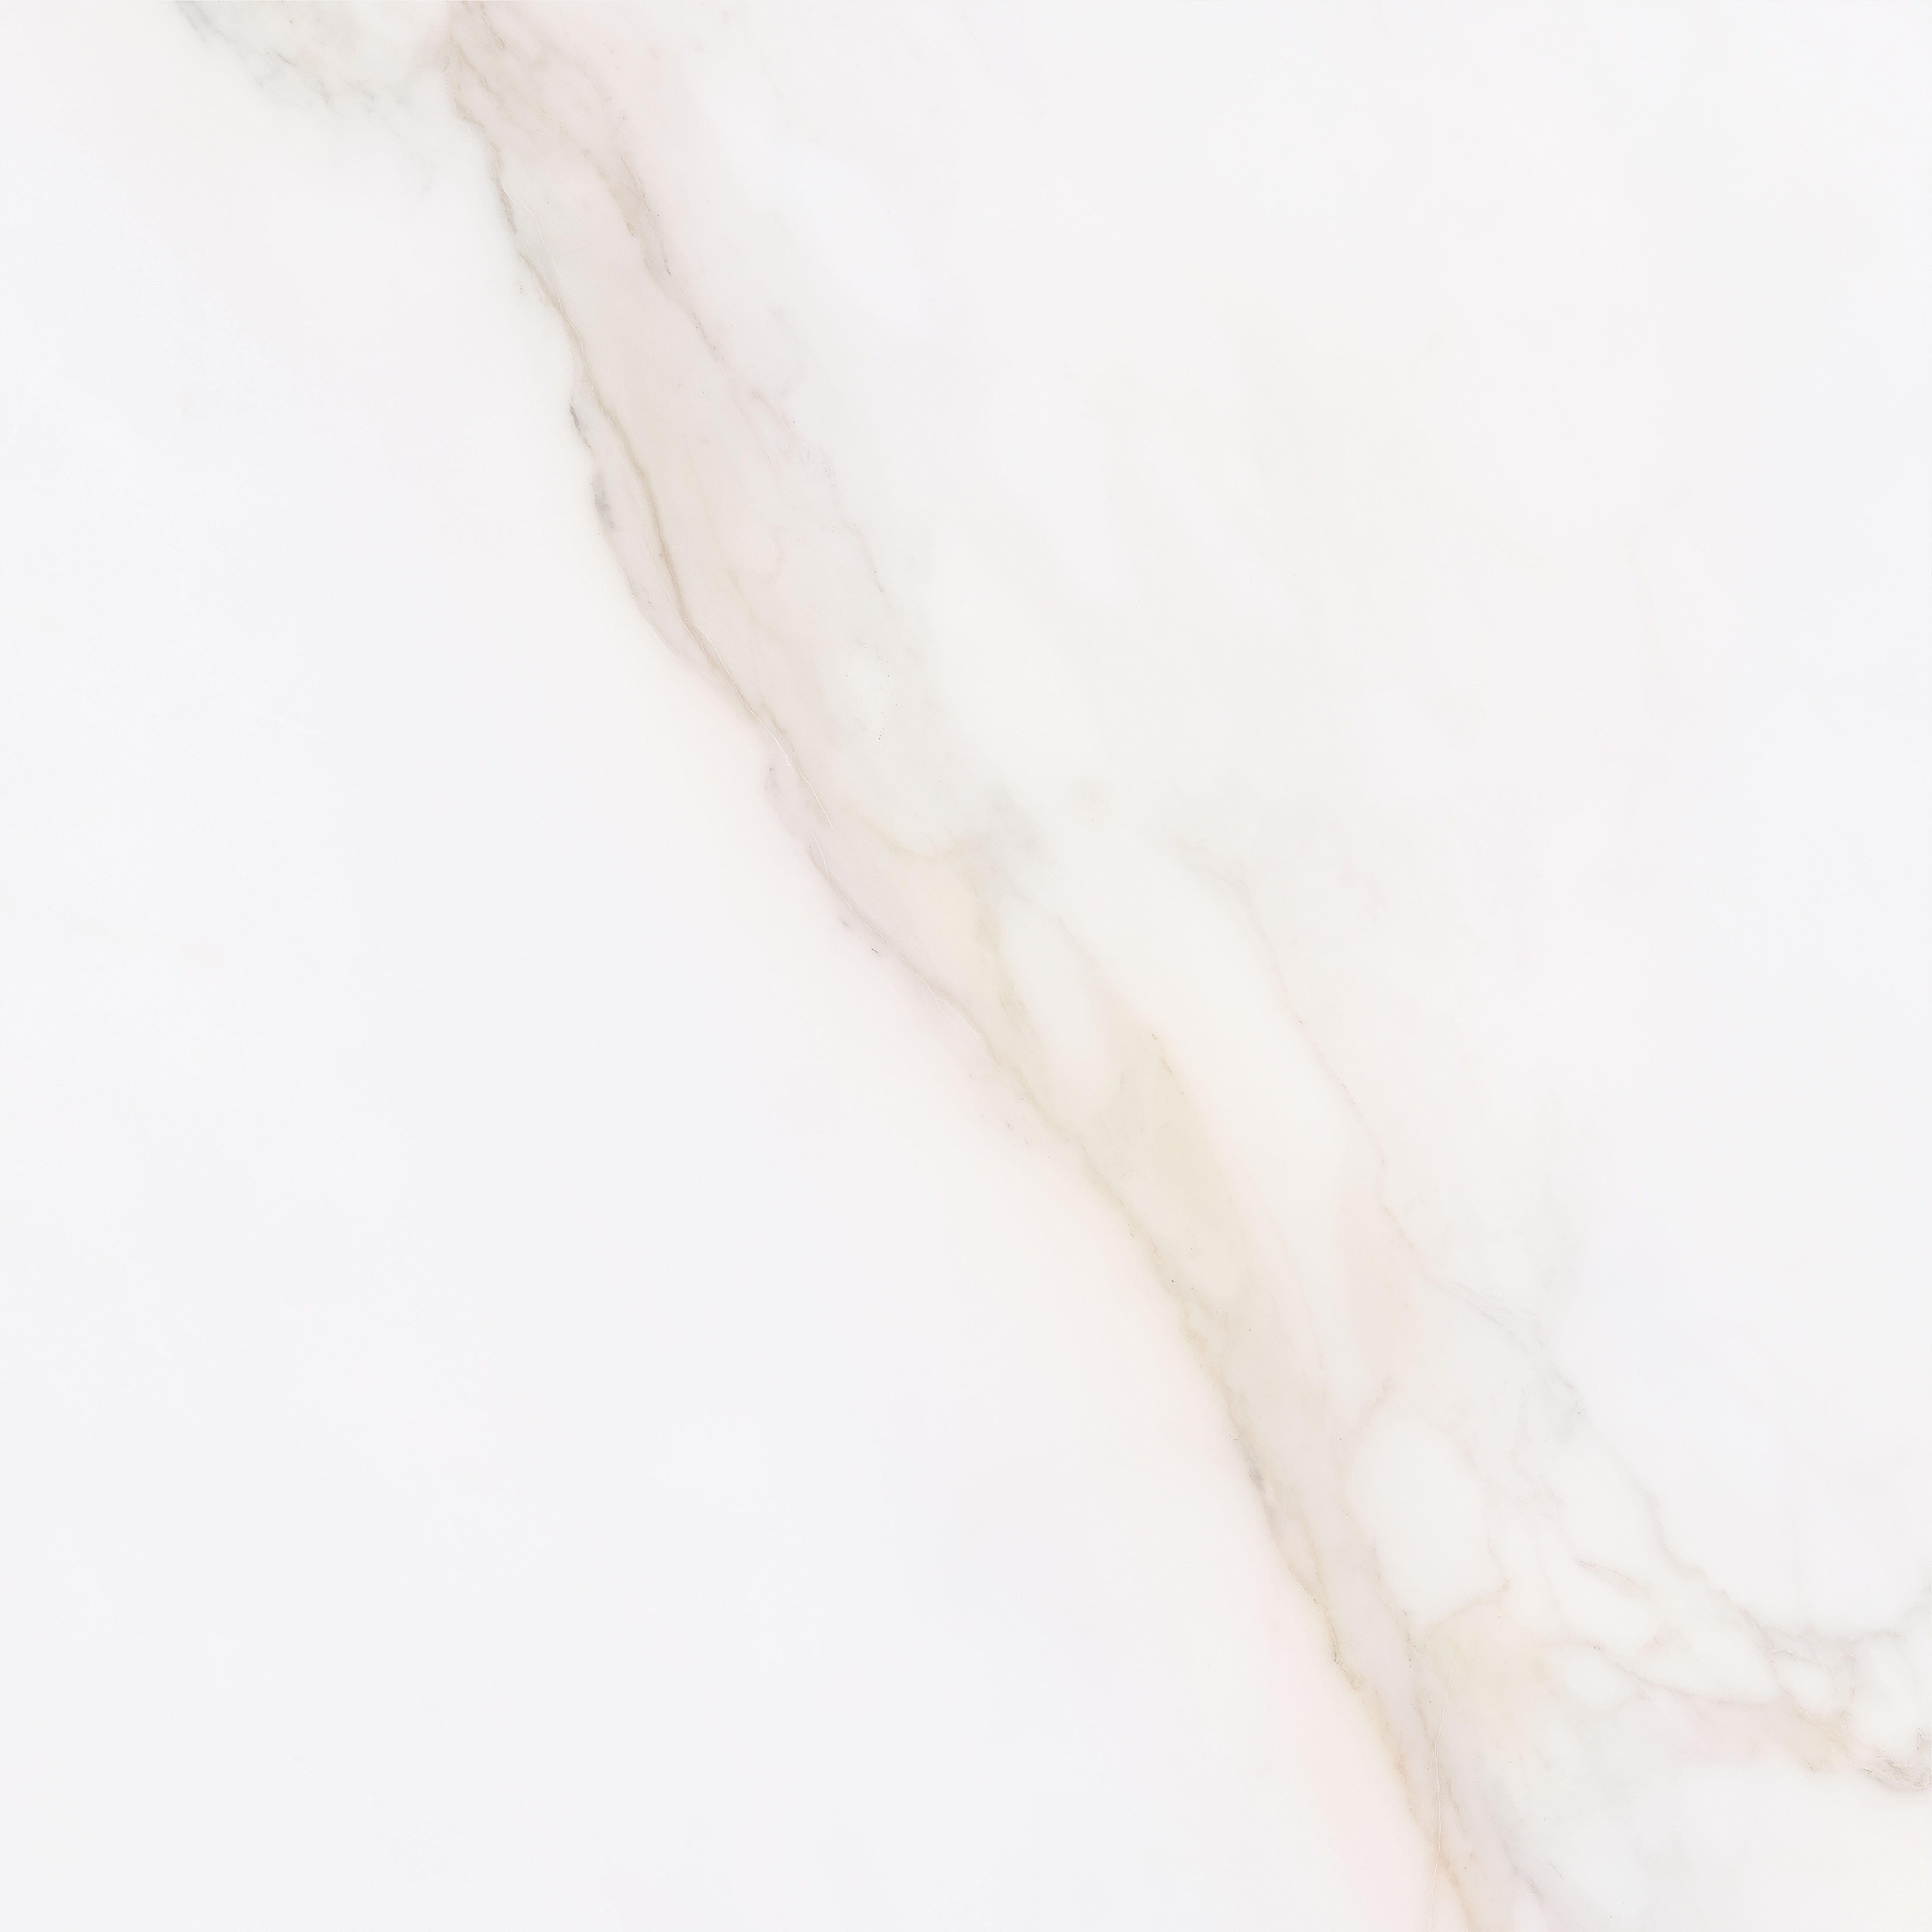 Vanezia Gres Kalmar Bodenfliesen Marmoroptik Weiß matt 75x75 cm rekt. 